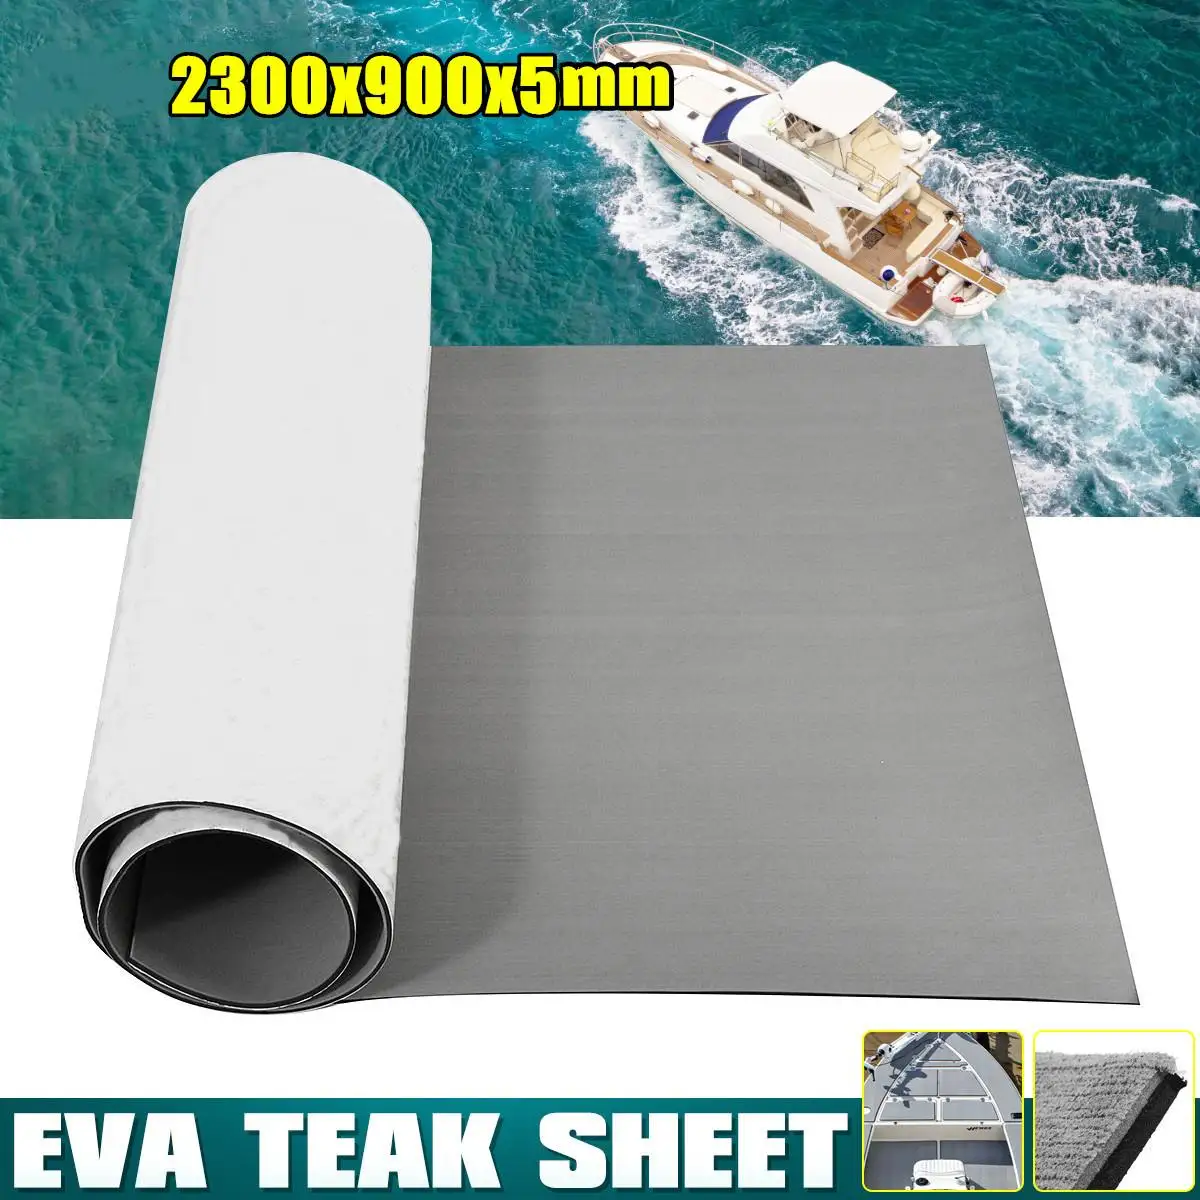 2300x900x5mm EVA Foam Floor Mat For Marine Boat Flooring Faux Teak Decking Sheet Pad For Yacht RV Self Adhesive Flooring Carpet